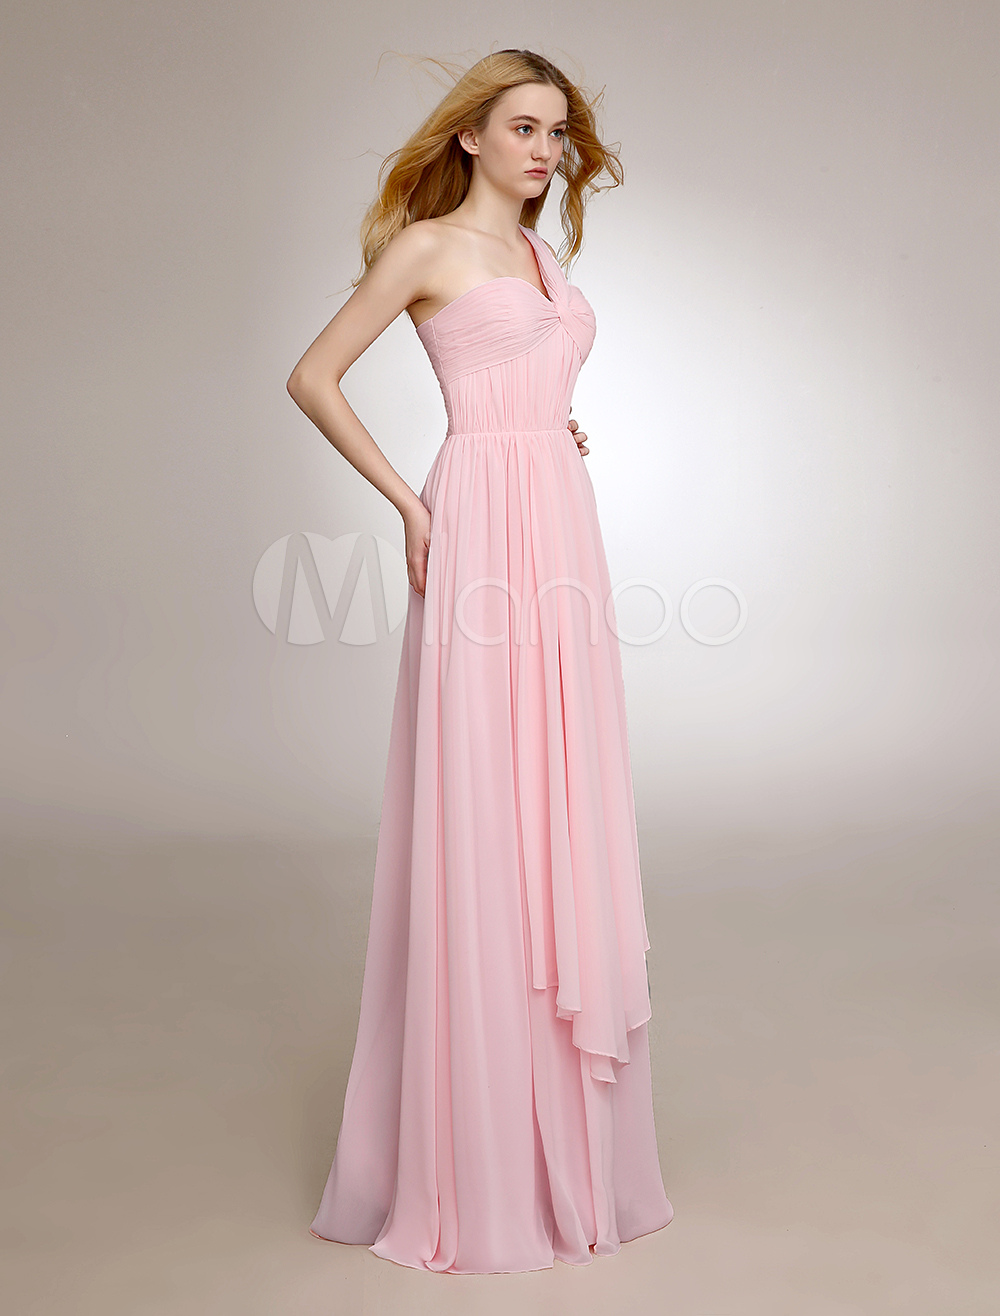 Blush Pink One-Shoulder Bridesmaid Dress With Twisted Chiffon - Milanoo.com